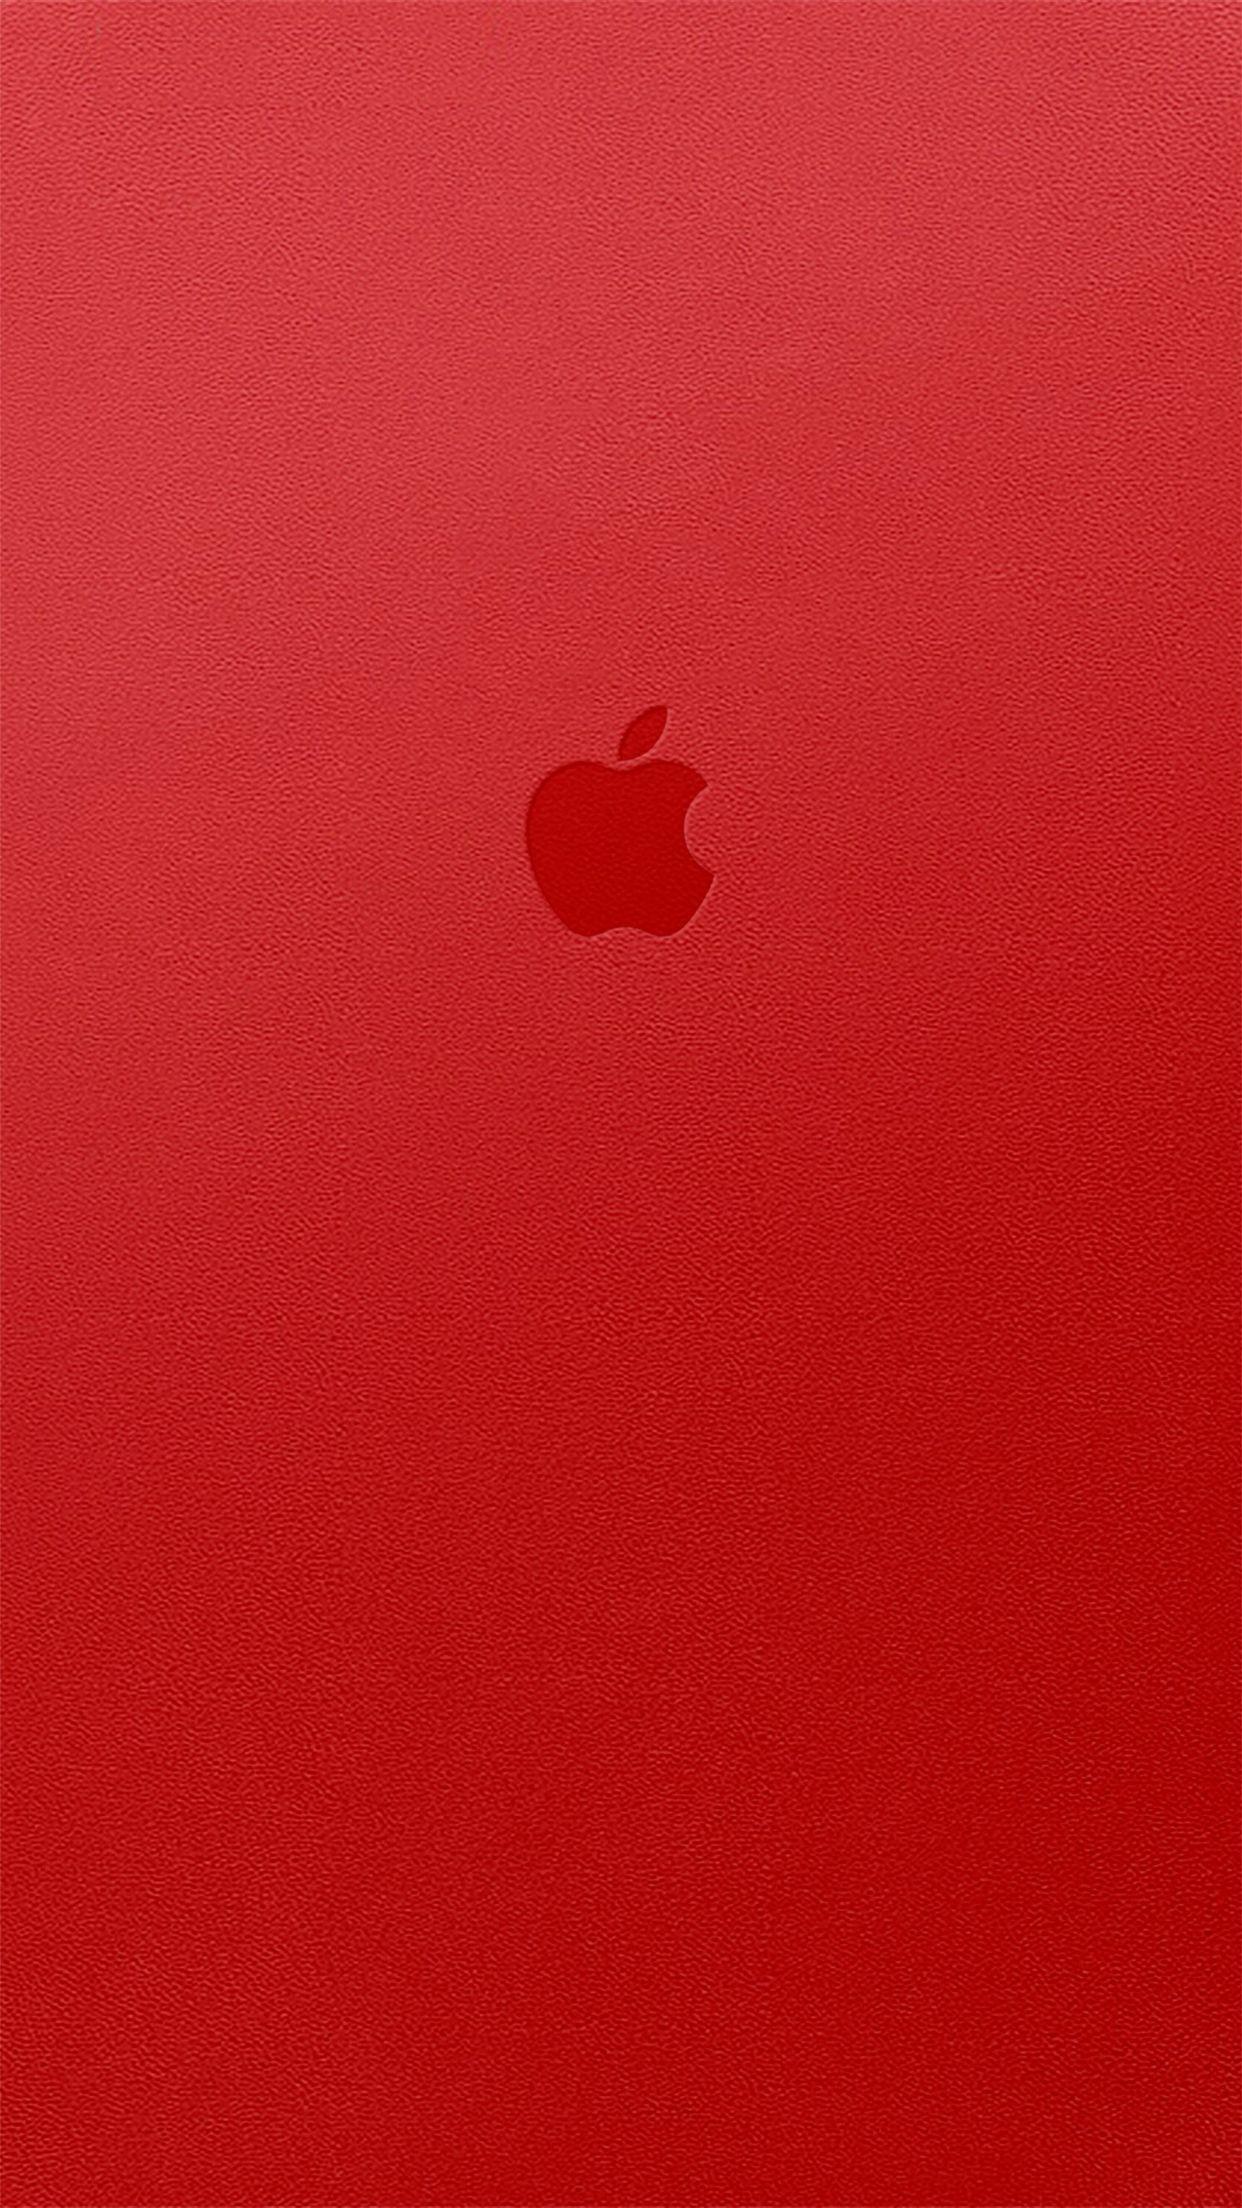 Apple iPhone 6s Plus wallpaper red. Apple logo wallpaper, Apple